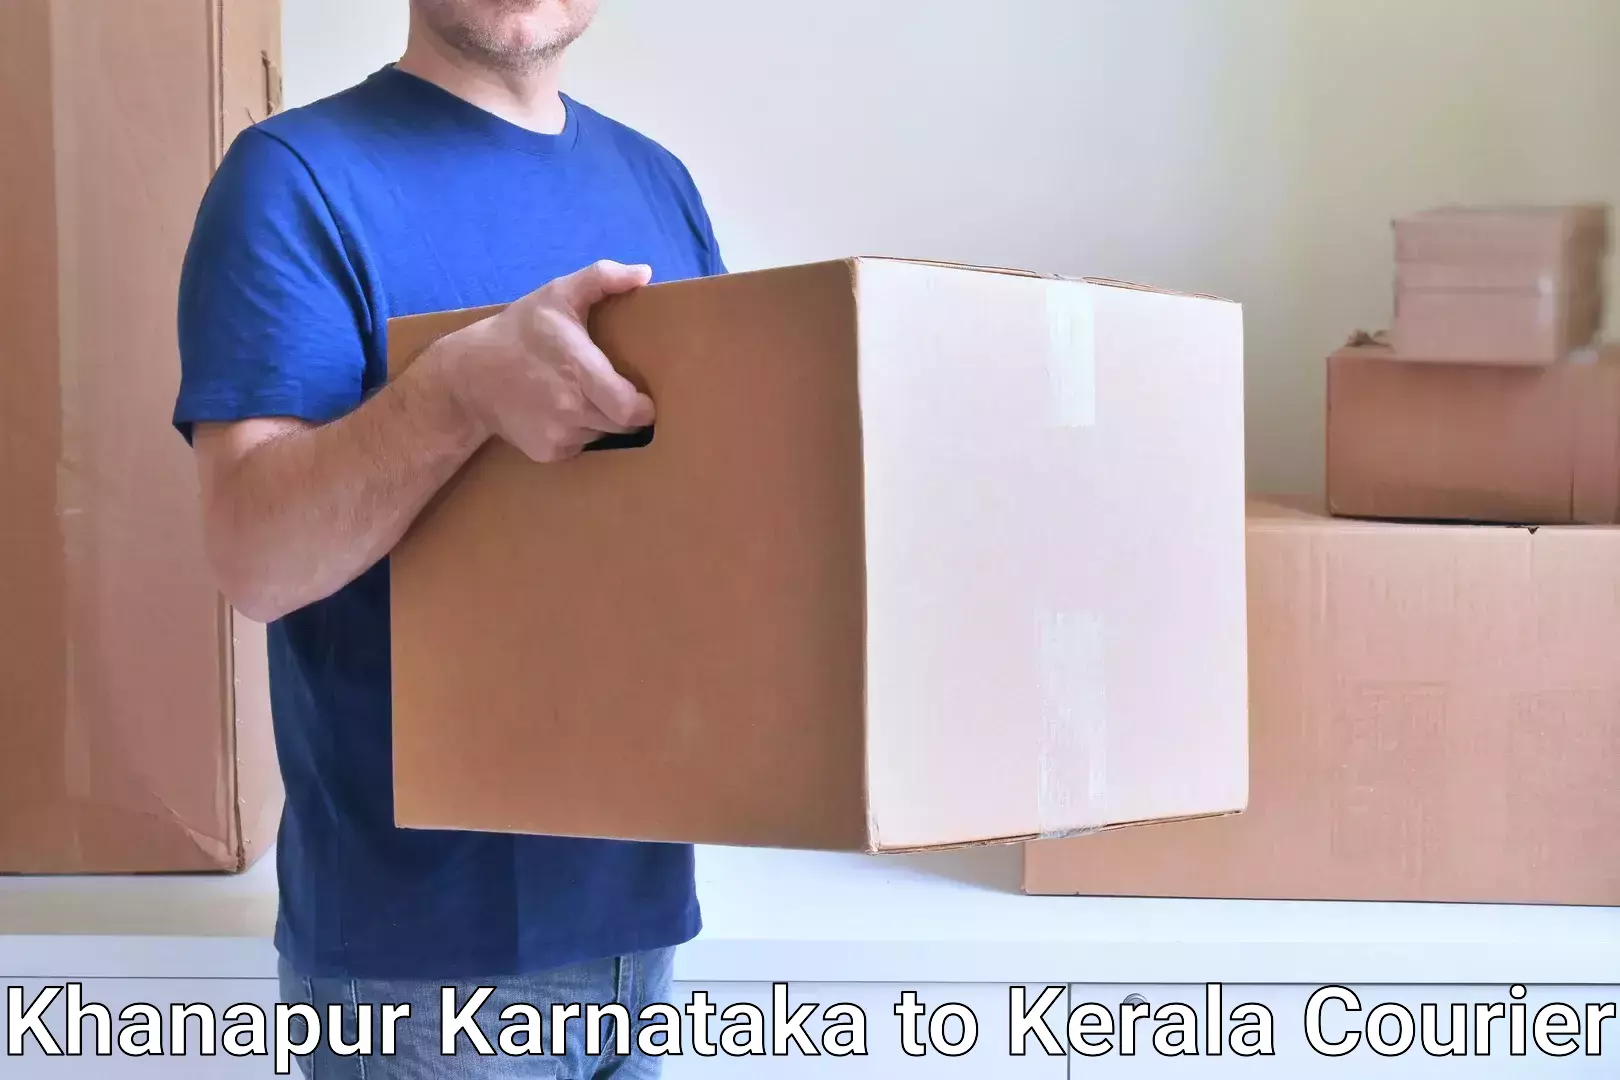 Courier service innovation Khanapur Karnataka to Wayanad